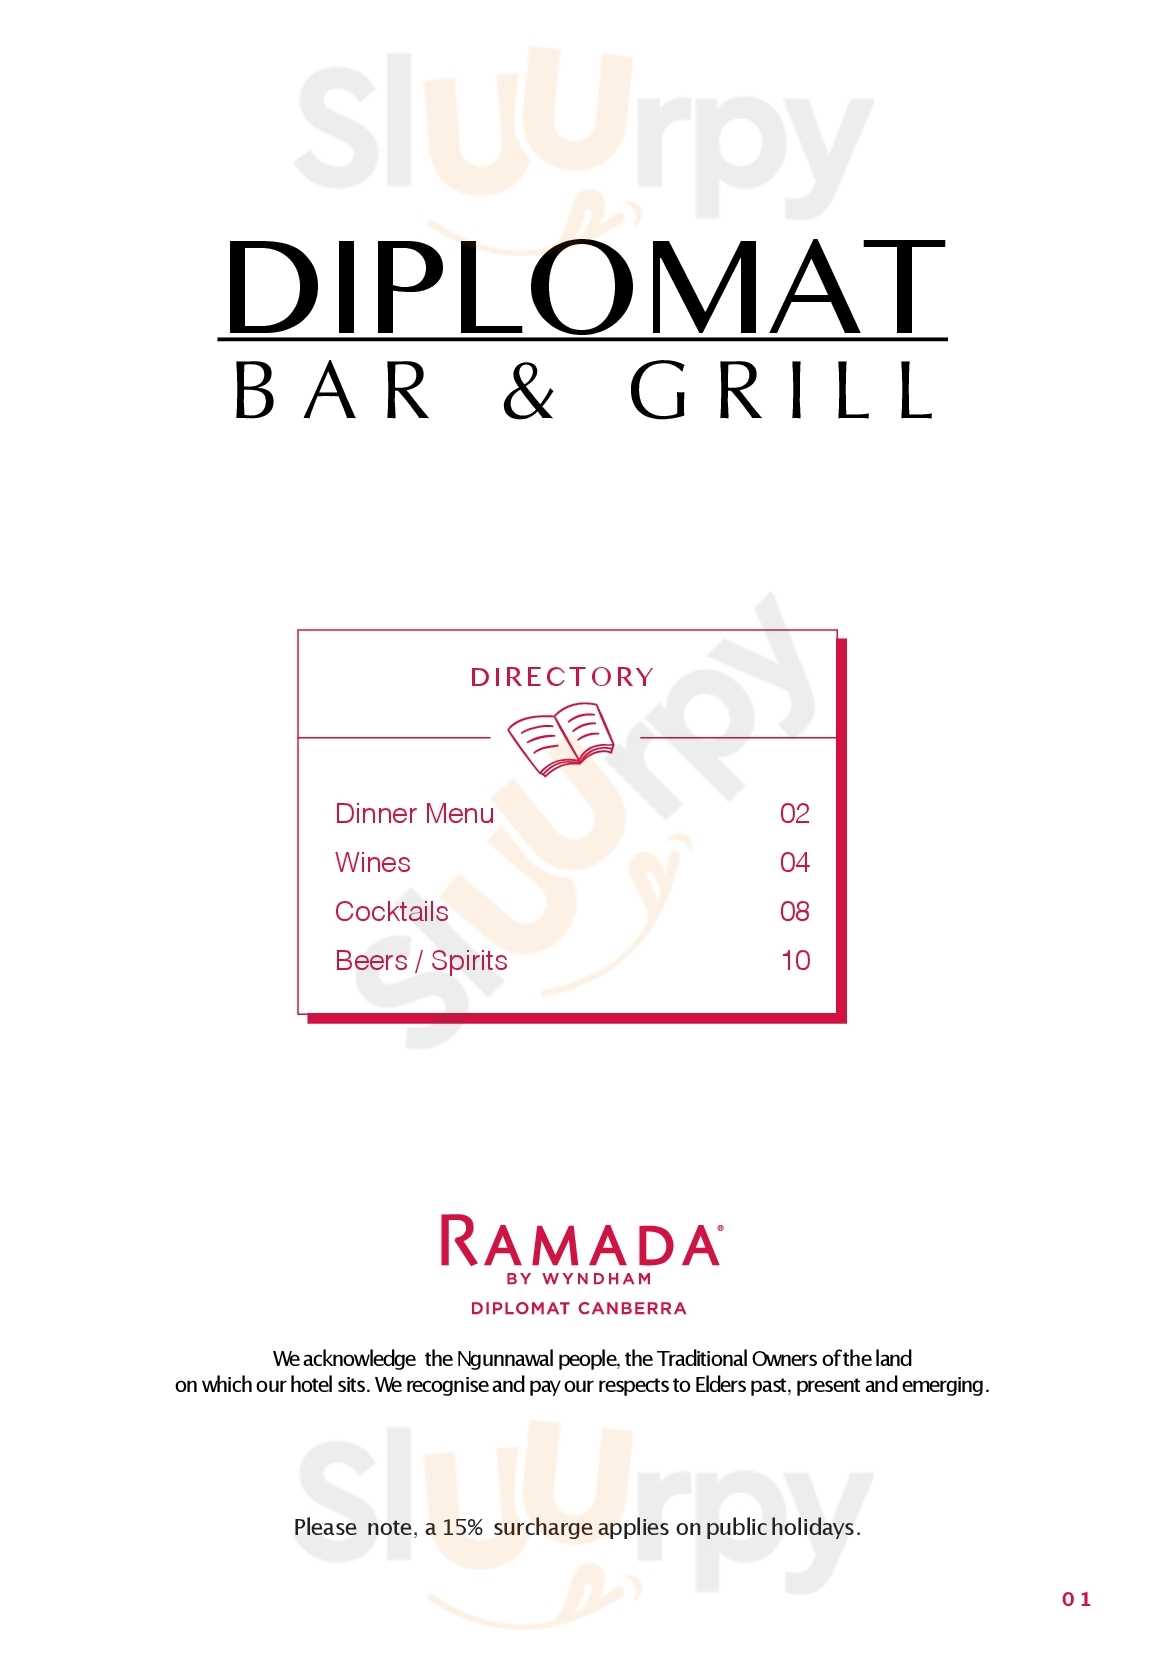 Diplomat Bar & Grill Canberra Menu - 1